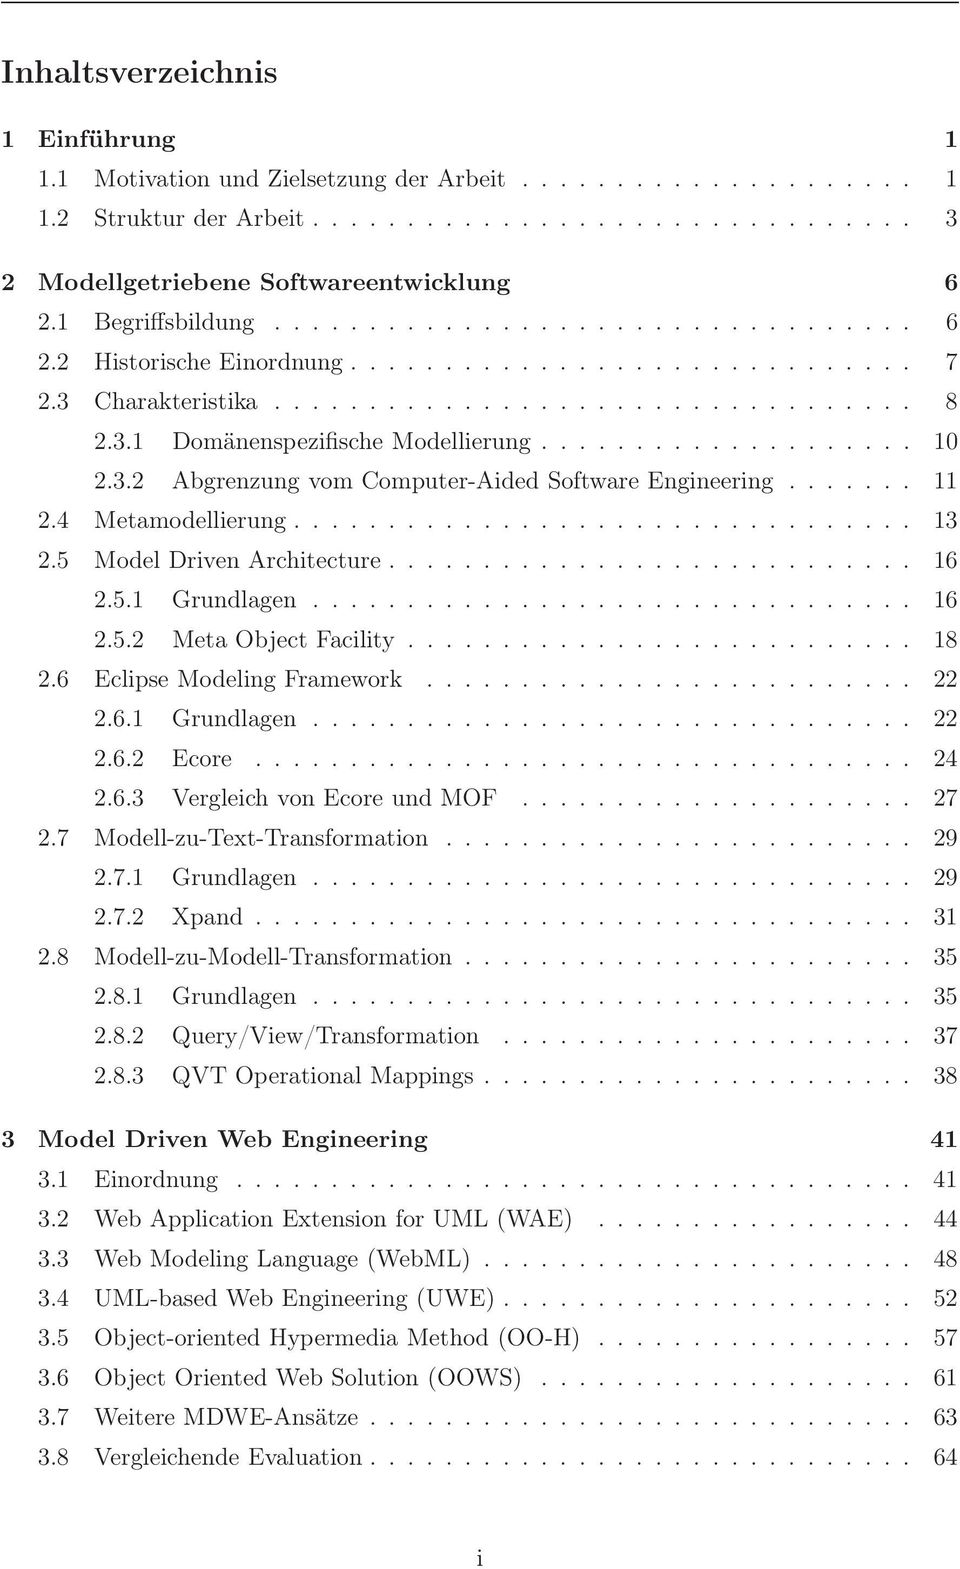 .. 16 2.5.2 Meta Object Facility..... 18 2.6 EclipseModelingFramework... 22 2.6.1 Grundlagen... 22 2.6.2 Ecore... 24 2.6.3 VergleichvonEcoreundMOF... 27 2.7 Modell-zu-Text-Transformation... 29 2.7.1 Grundlagen... 29 2.7.2 Xpand.